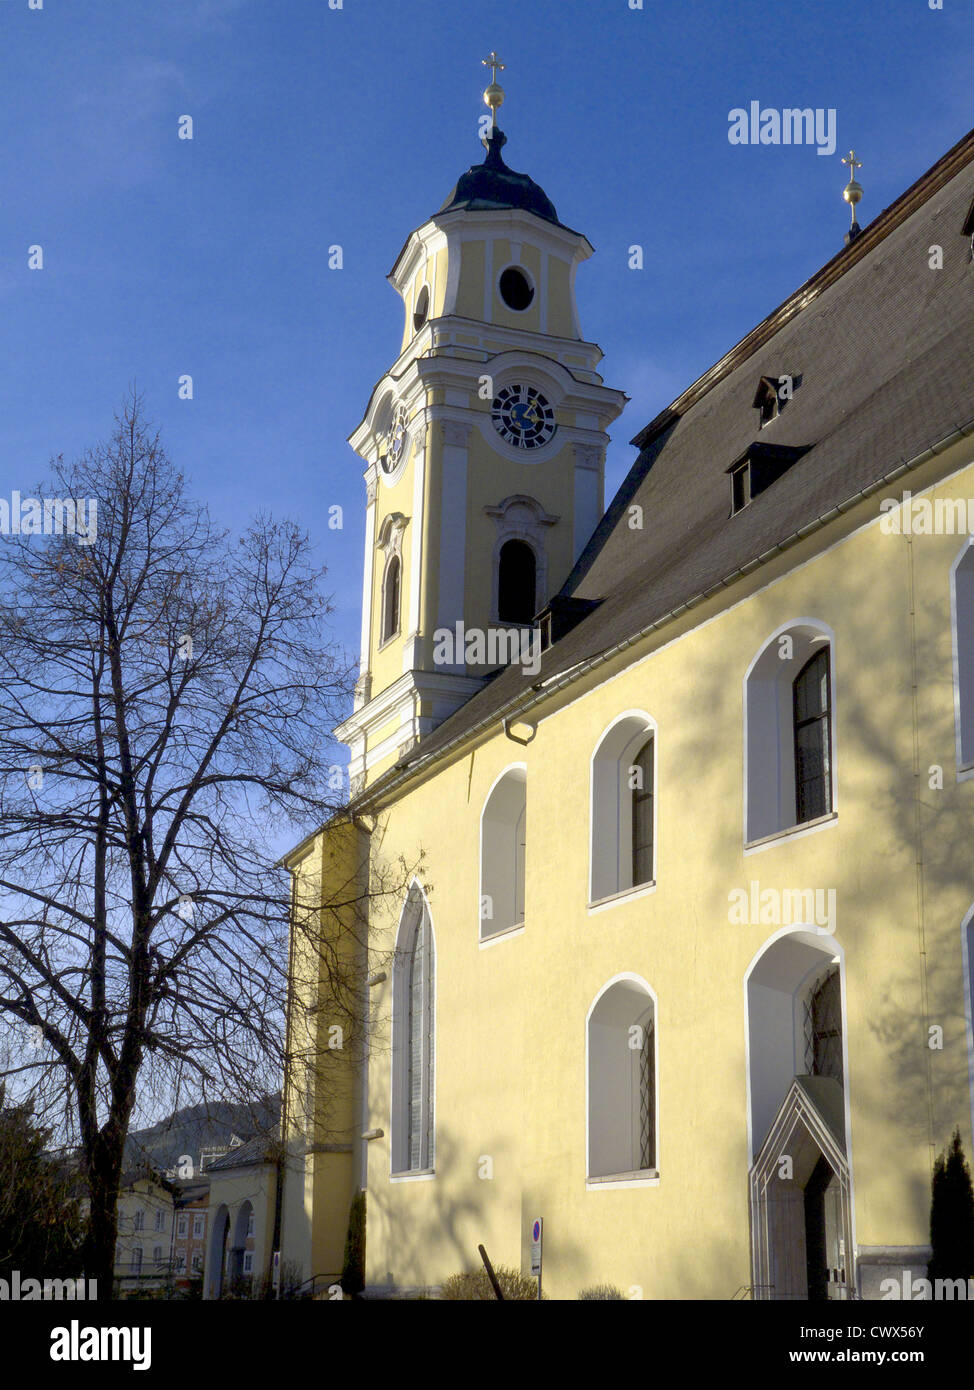 Stiftskirche Church at Mondsee, Salzkammergut, Austria Stock Photo